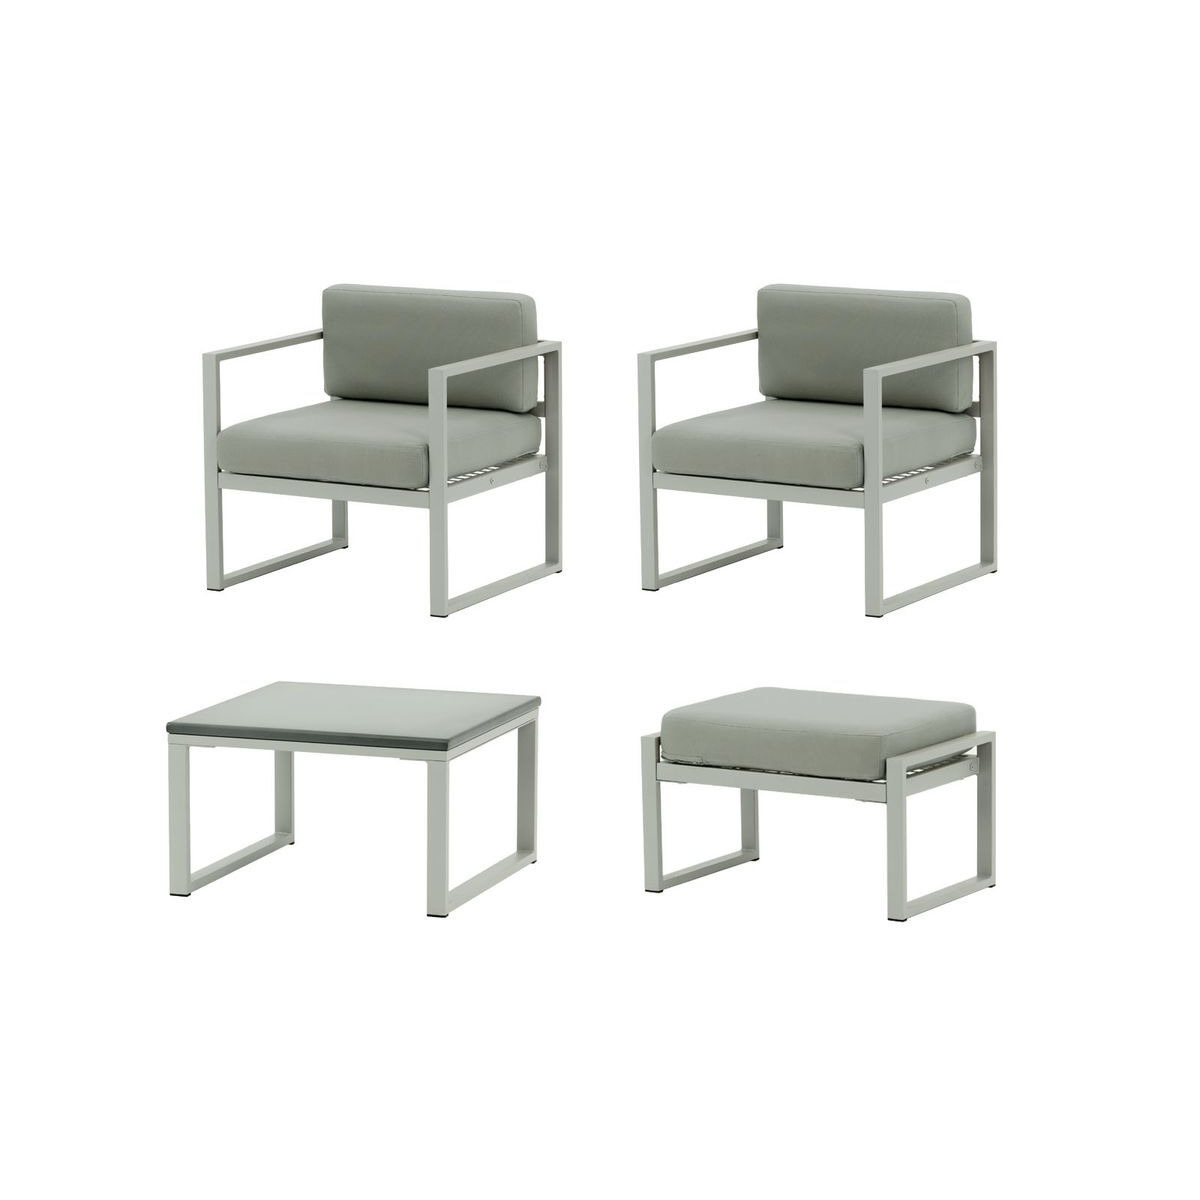 Sunset 4-piece garden furniture set C, grey, Leg colour: grey steel